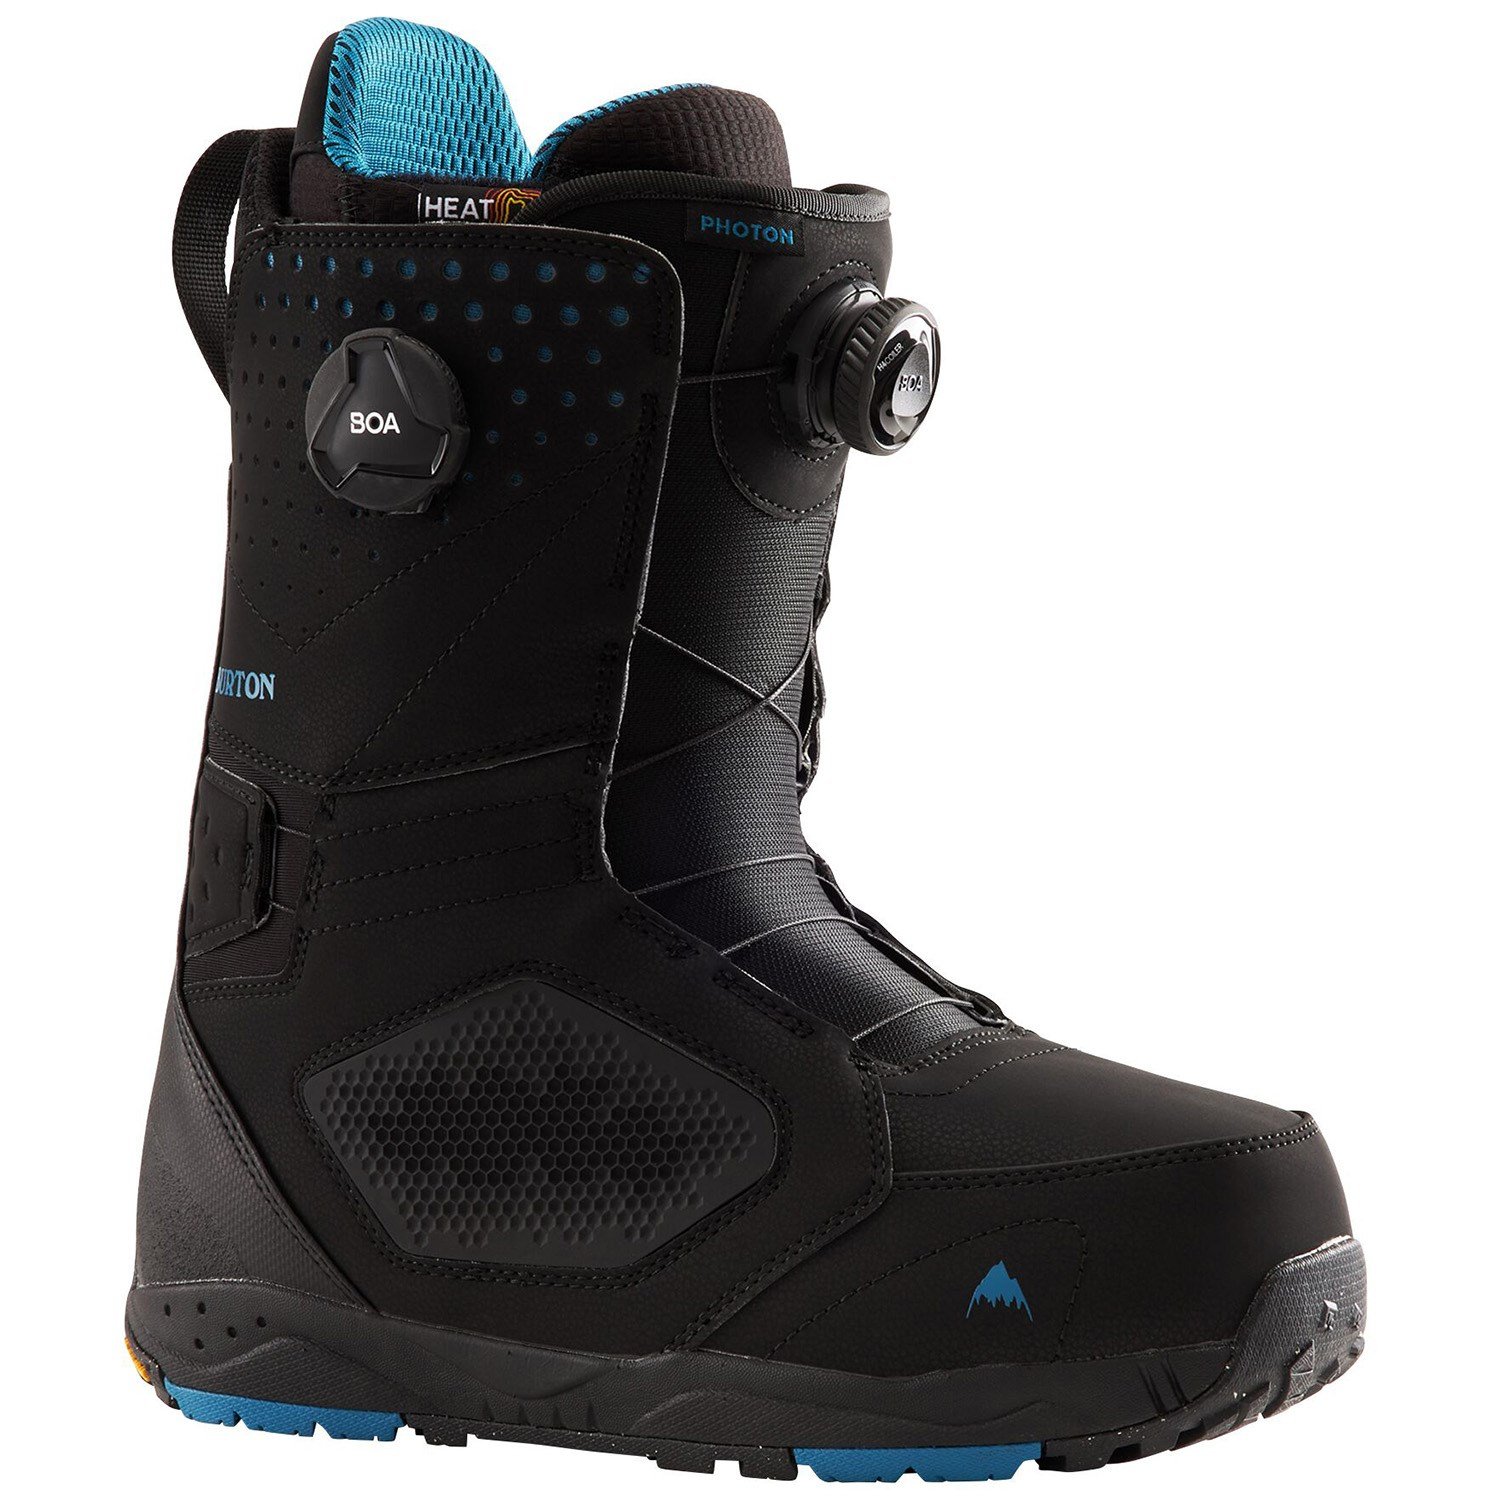 variabel Tigge raid Burton Photon Boa Snowboard Boots | evo